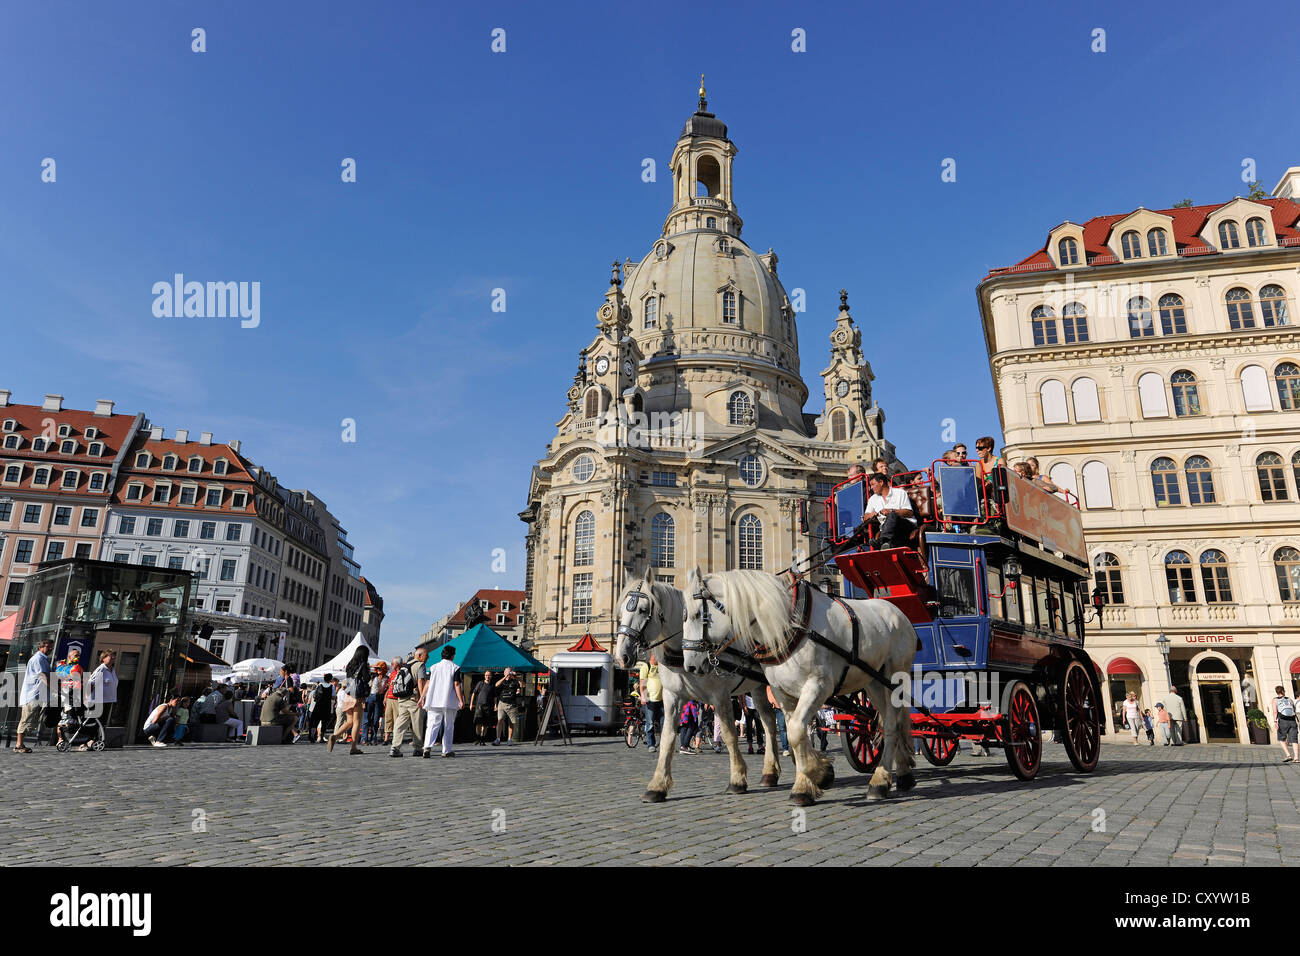 City Festival in Dresden, Frauenkirche church, Neumarkt square, horse-drawn carriage, Saxony Stock Photo